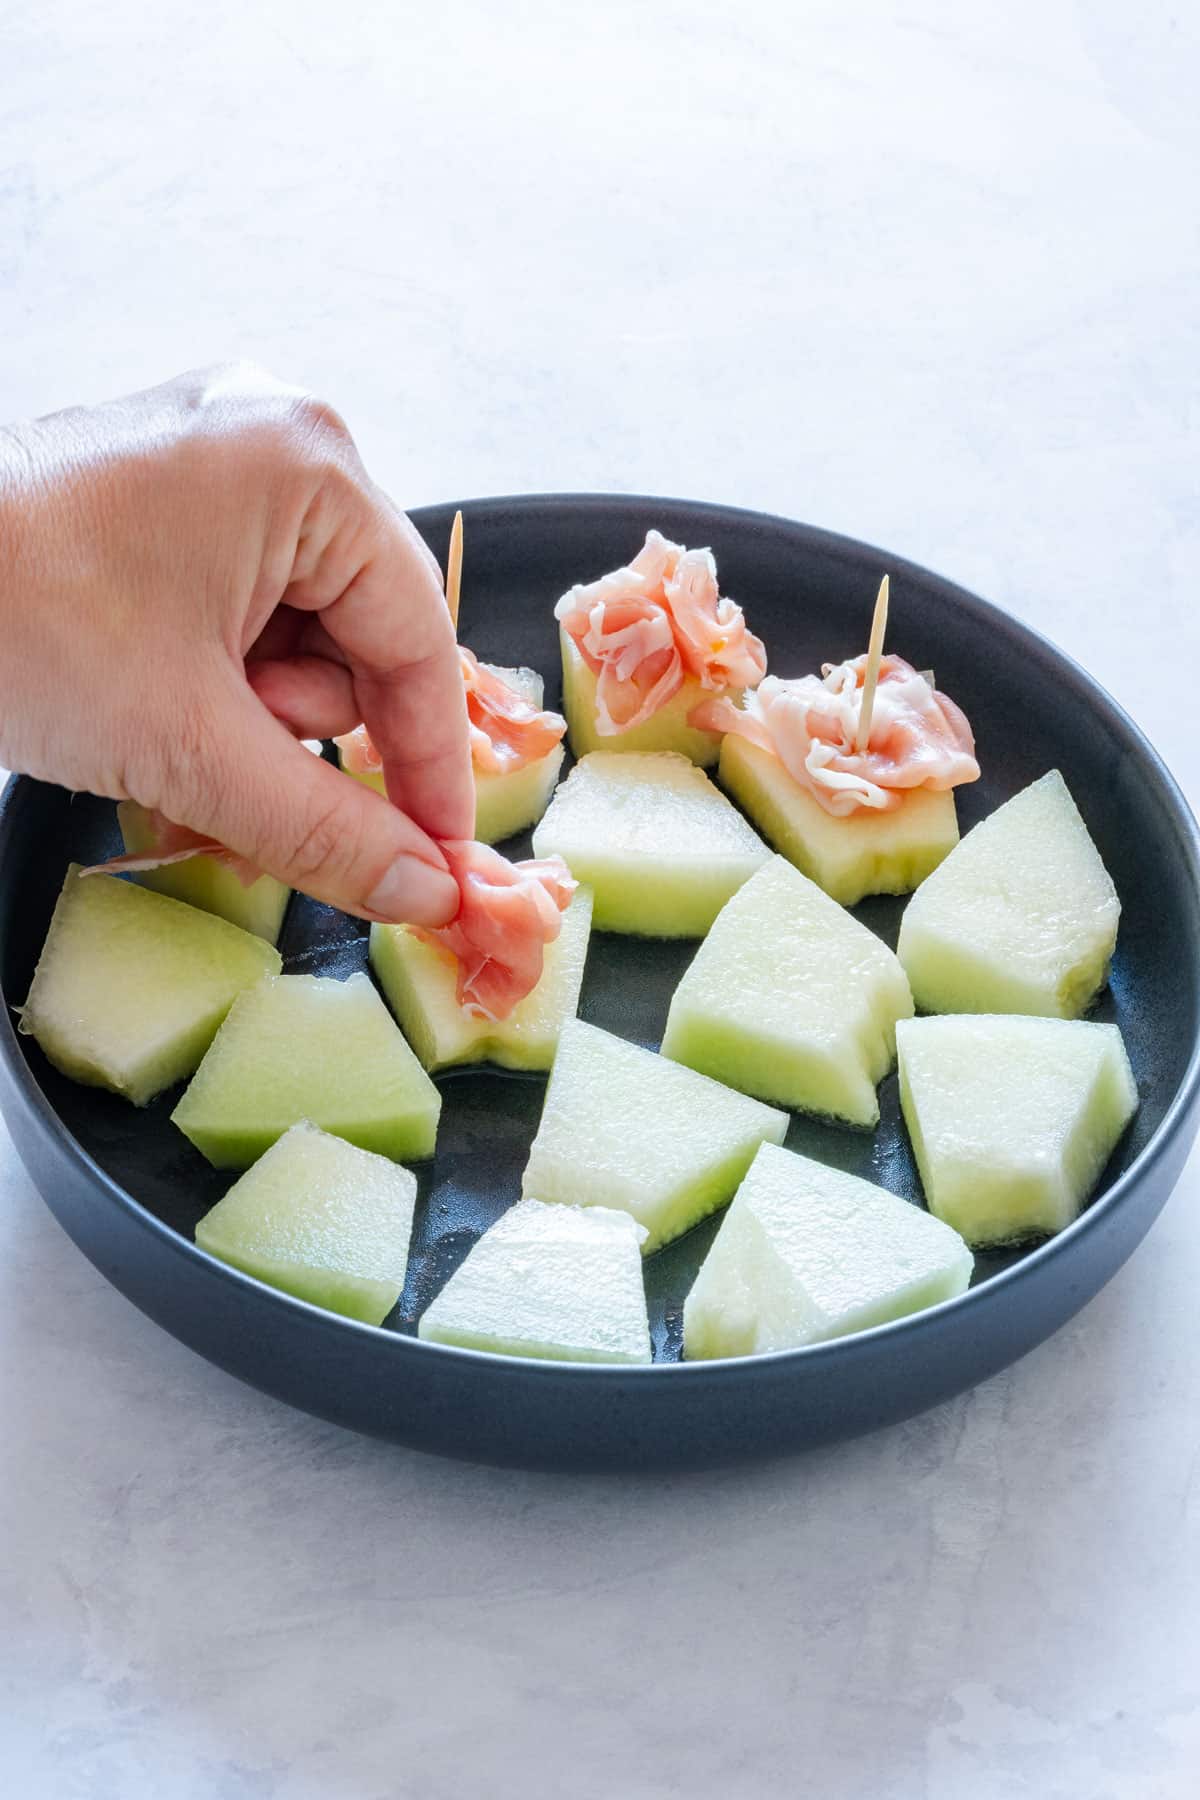 Hand placing prosciutto ham on a piece of melon.